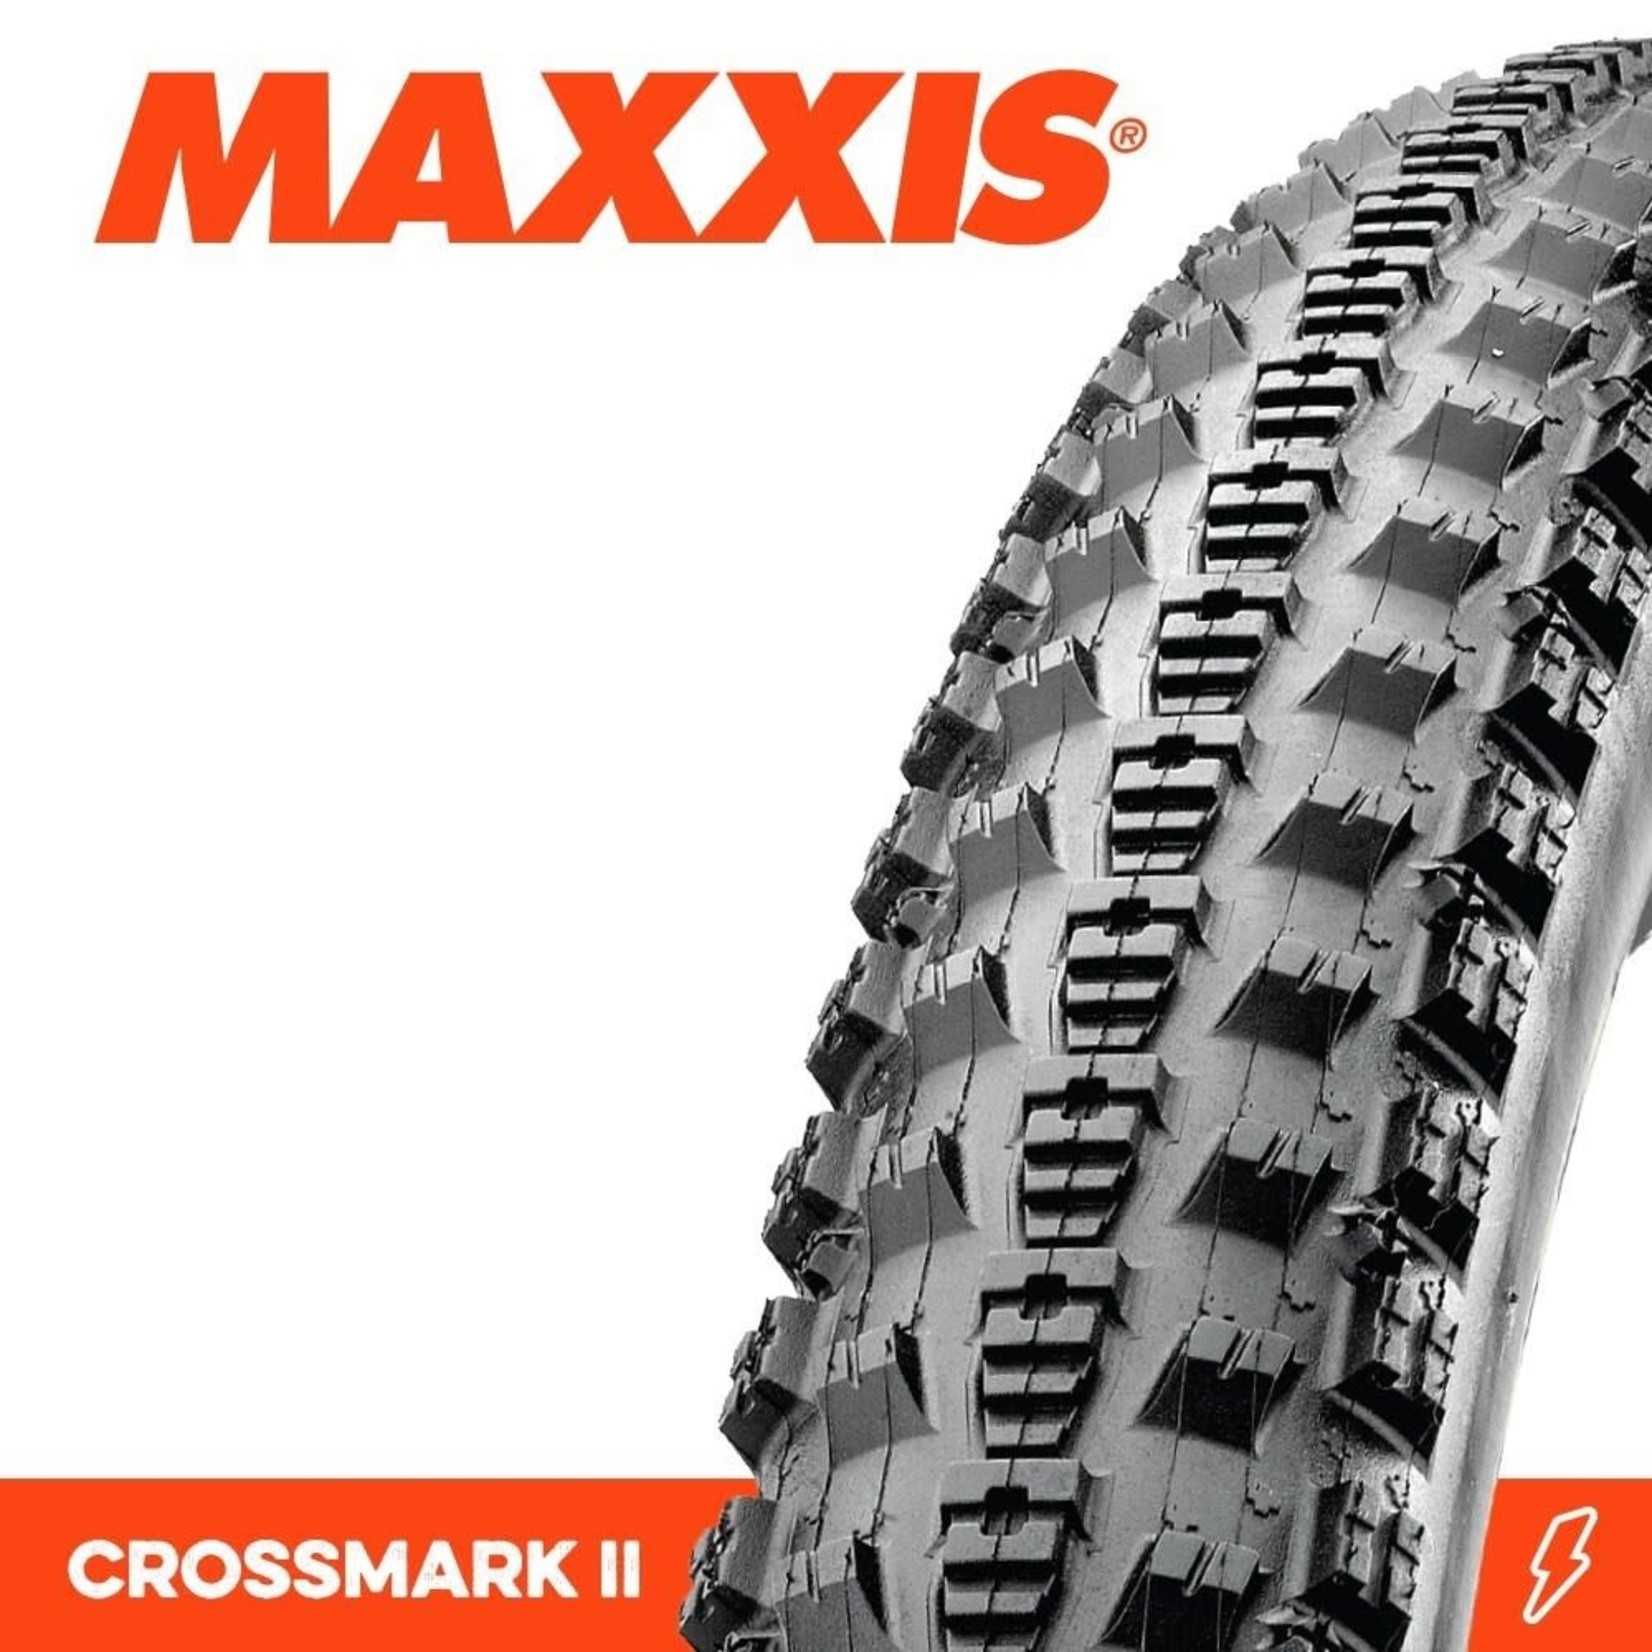 Maxxis Maxxis Crossmark II Bike Tyre - 26 X 2.10 - Wire Bead Tyre - 60TPI - Pair